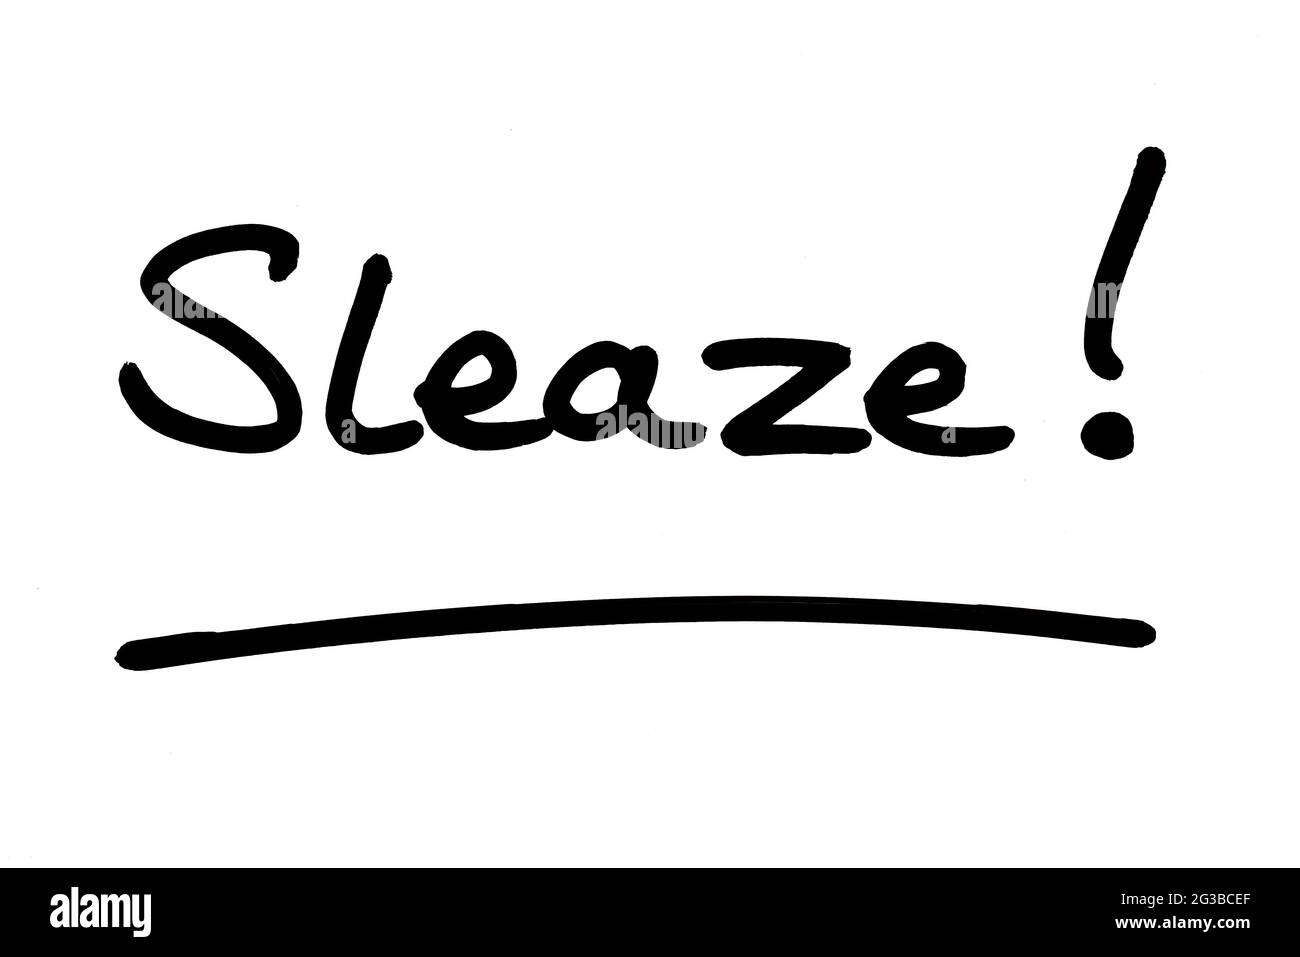 Sleaze! handwritten on a white background. Stock Photo